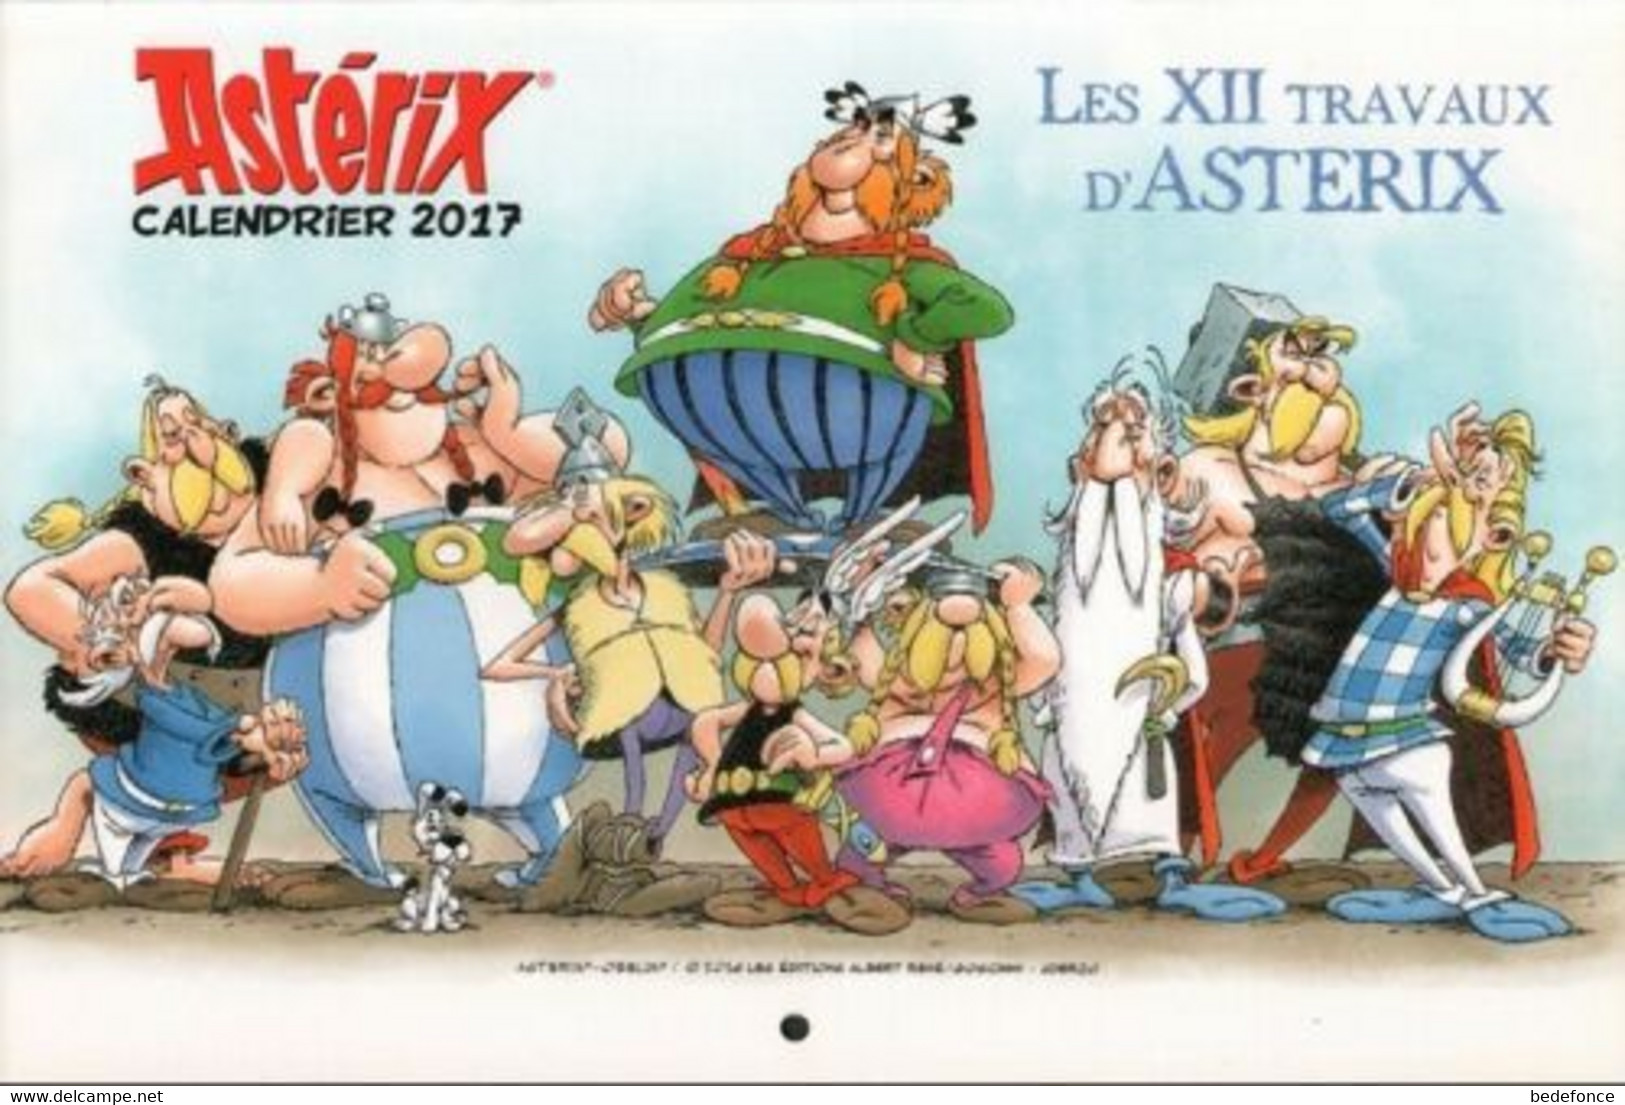 Astérix - Calendrier 2017 - Les XII Travaux D'Astérix - Goscinny Et Uderzo - Agenda & Kalender